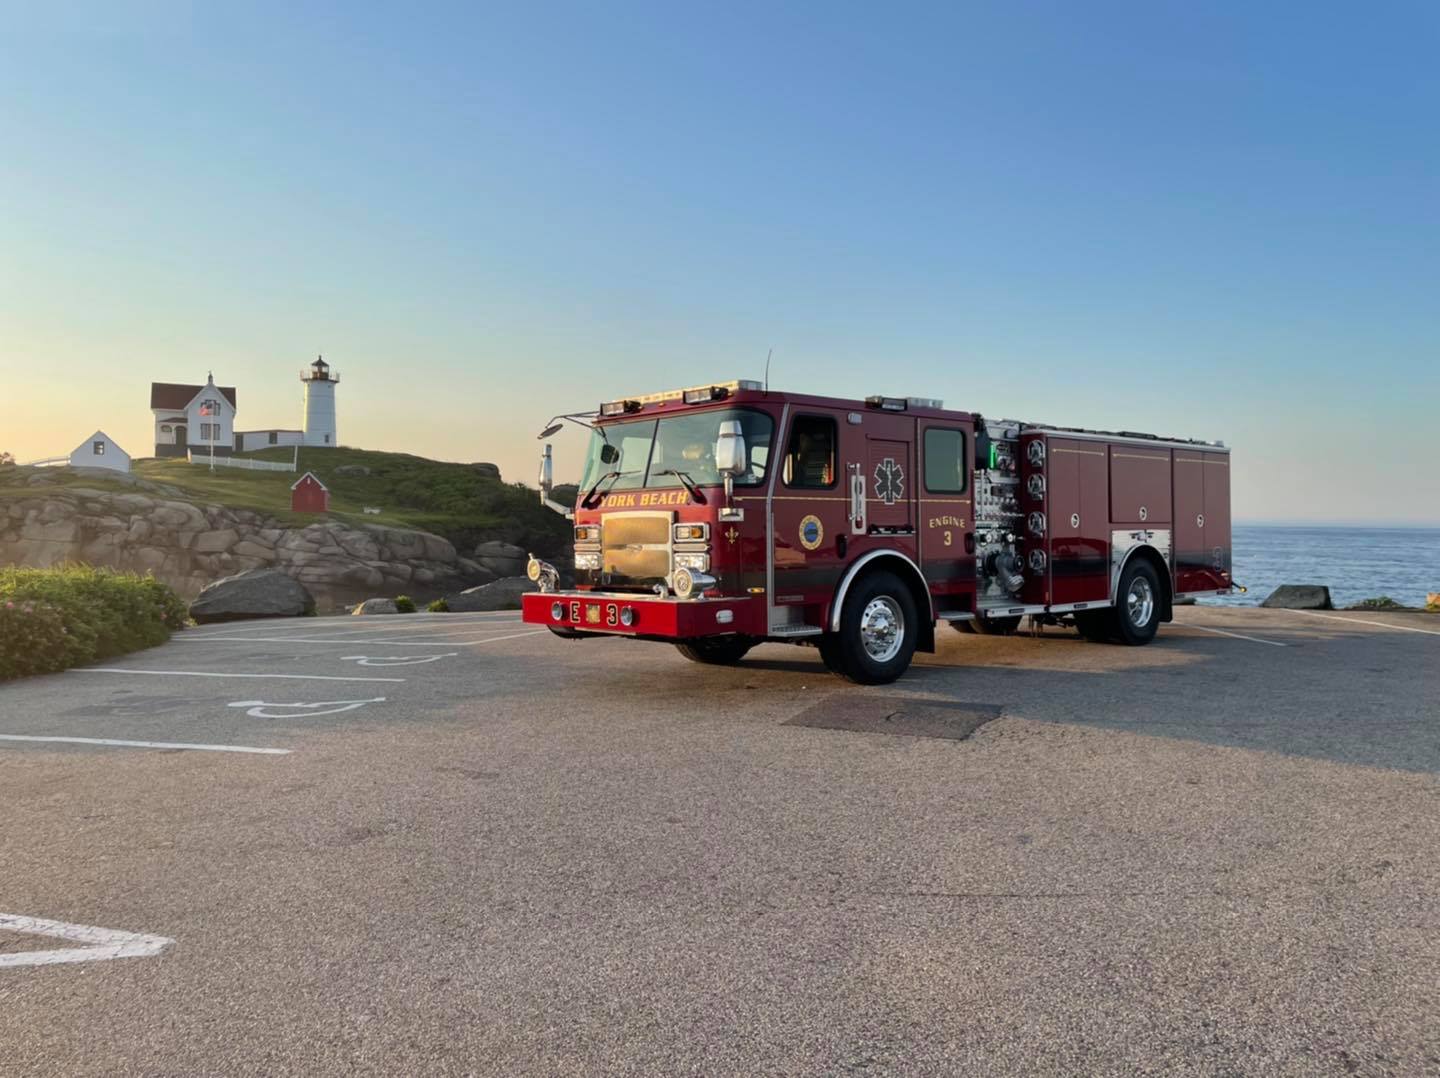 York Beach Fire Department Engine 3